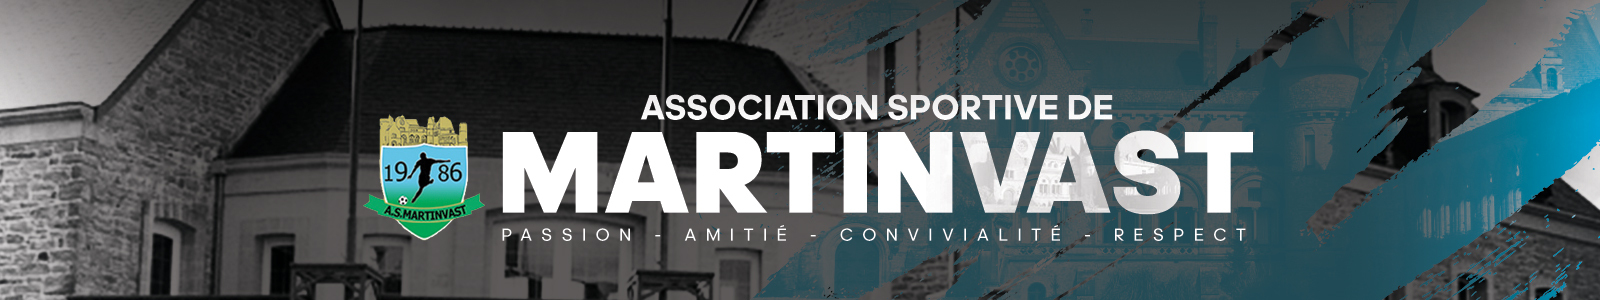 Association Sportive de MARTINVAST : site officiel du club de foot de martinvast - footeo